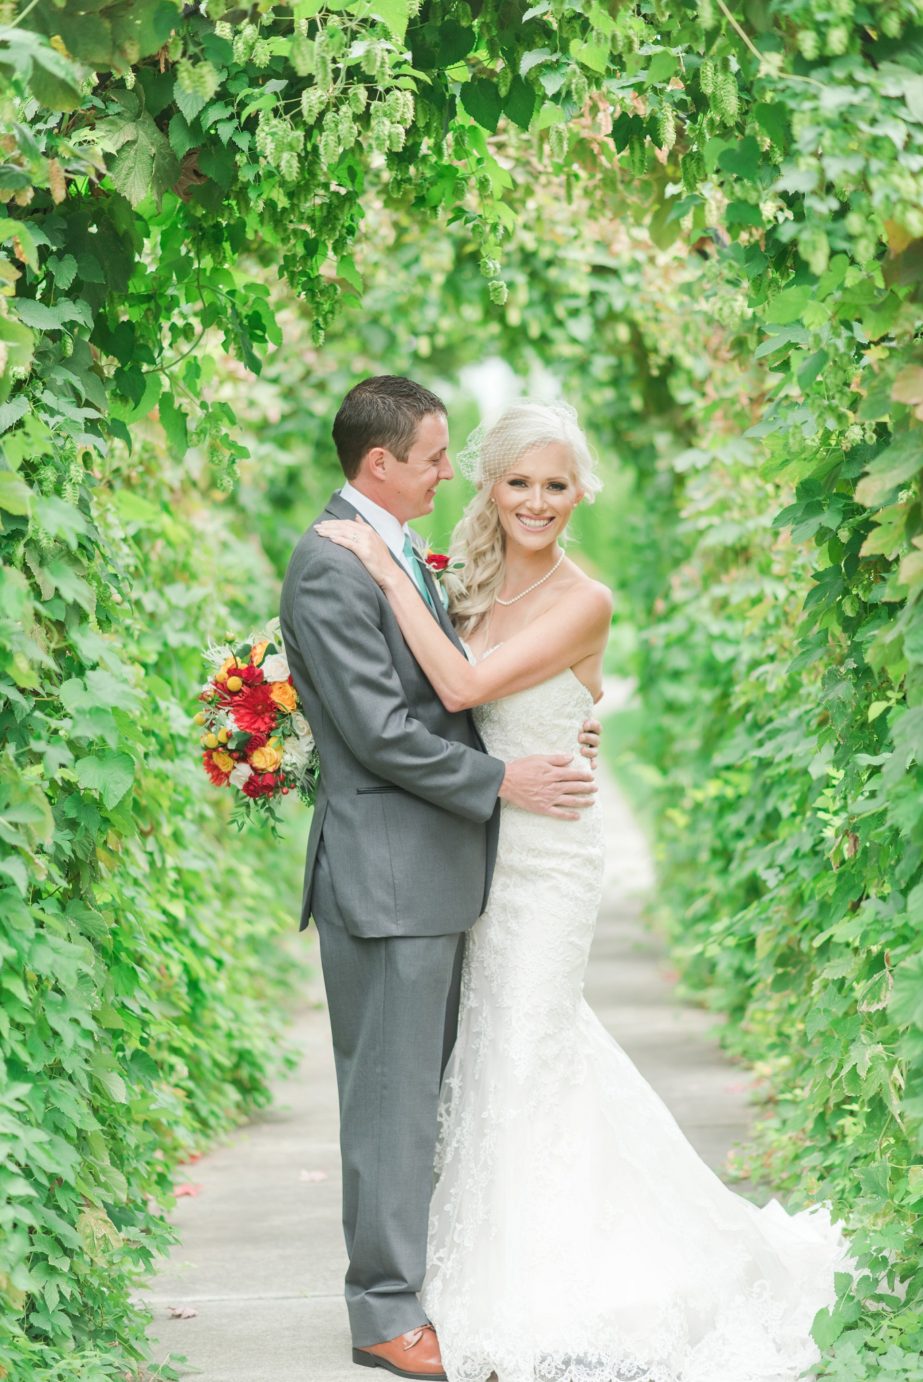 promise garden Bride and groom formal portrait photo